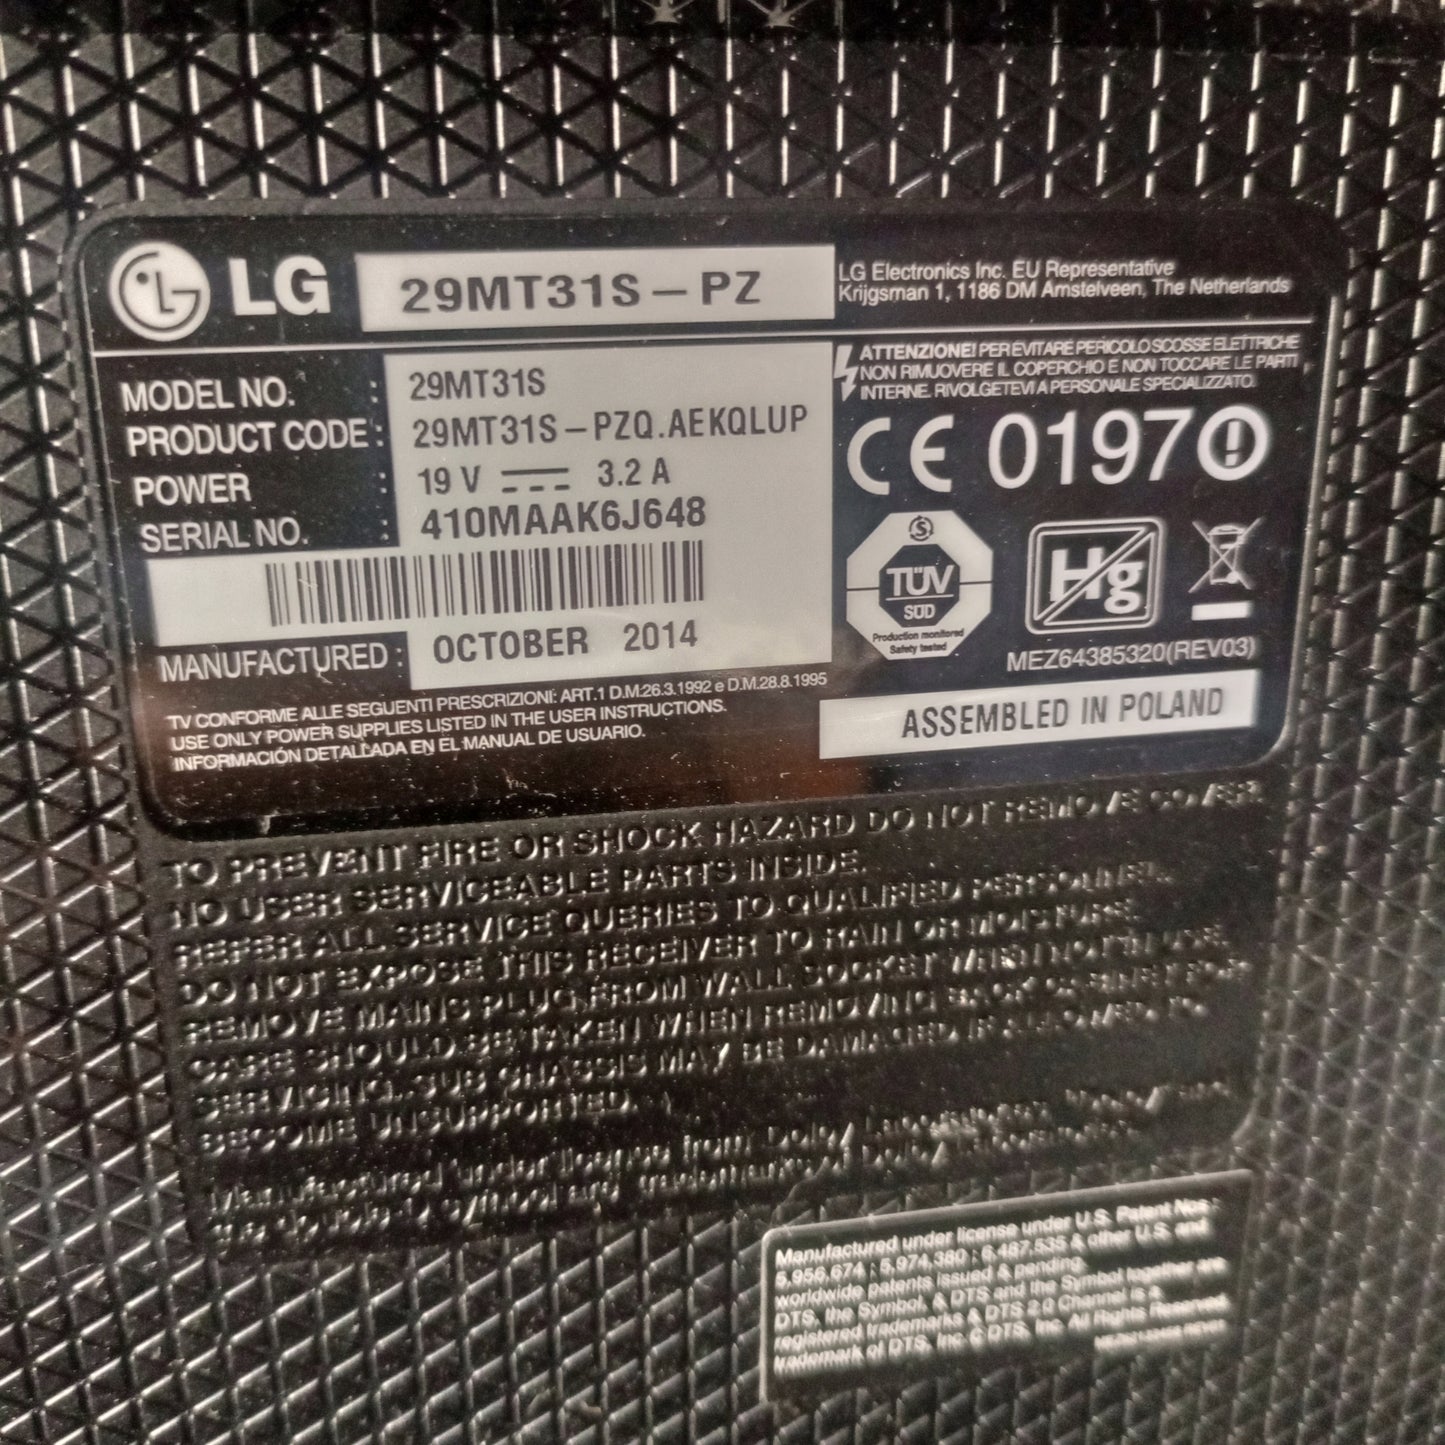 LG 29 Inch 29MT31S Smart Full HD Satellite (Triple Tuner) LED Internet TV - model number sticker